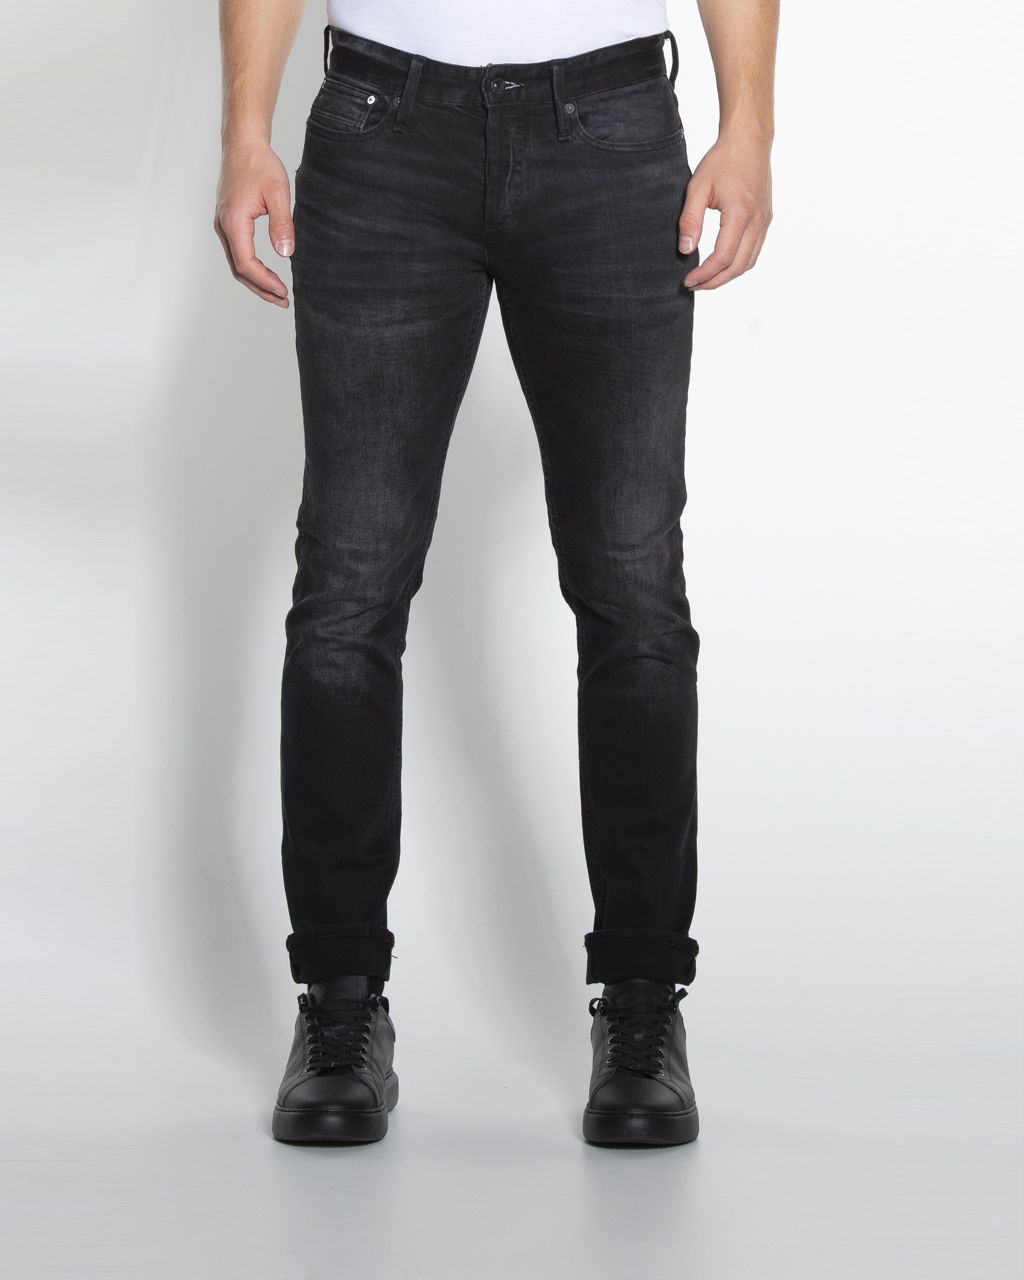 DENHAM Razor ACEB Jeans | Shop nu - Only for Men